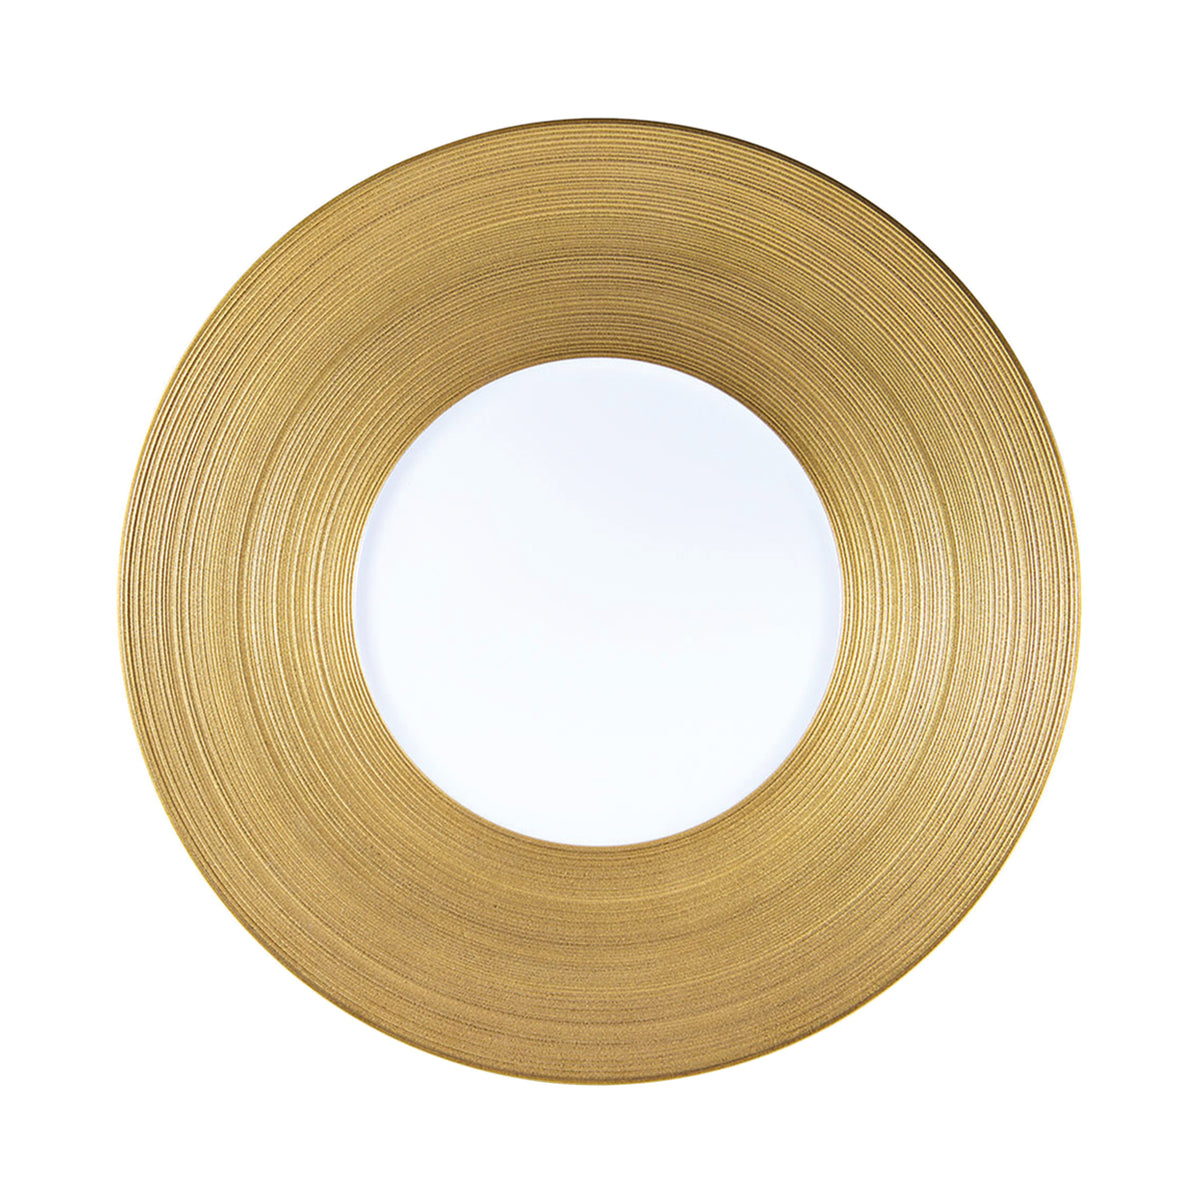 HEMISPHERE Gold - 29 cm plate